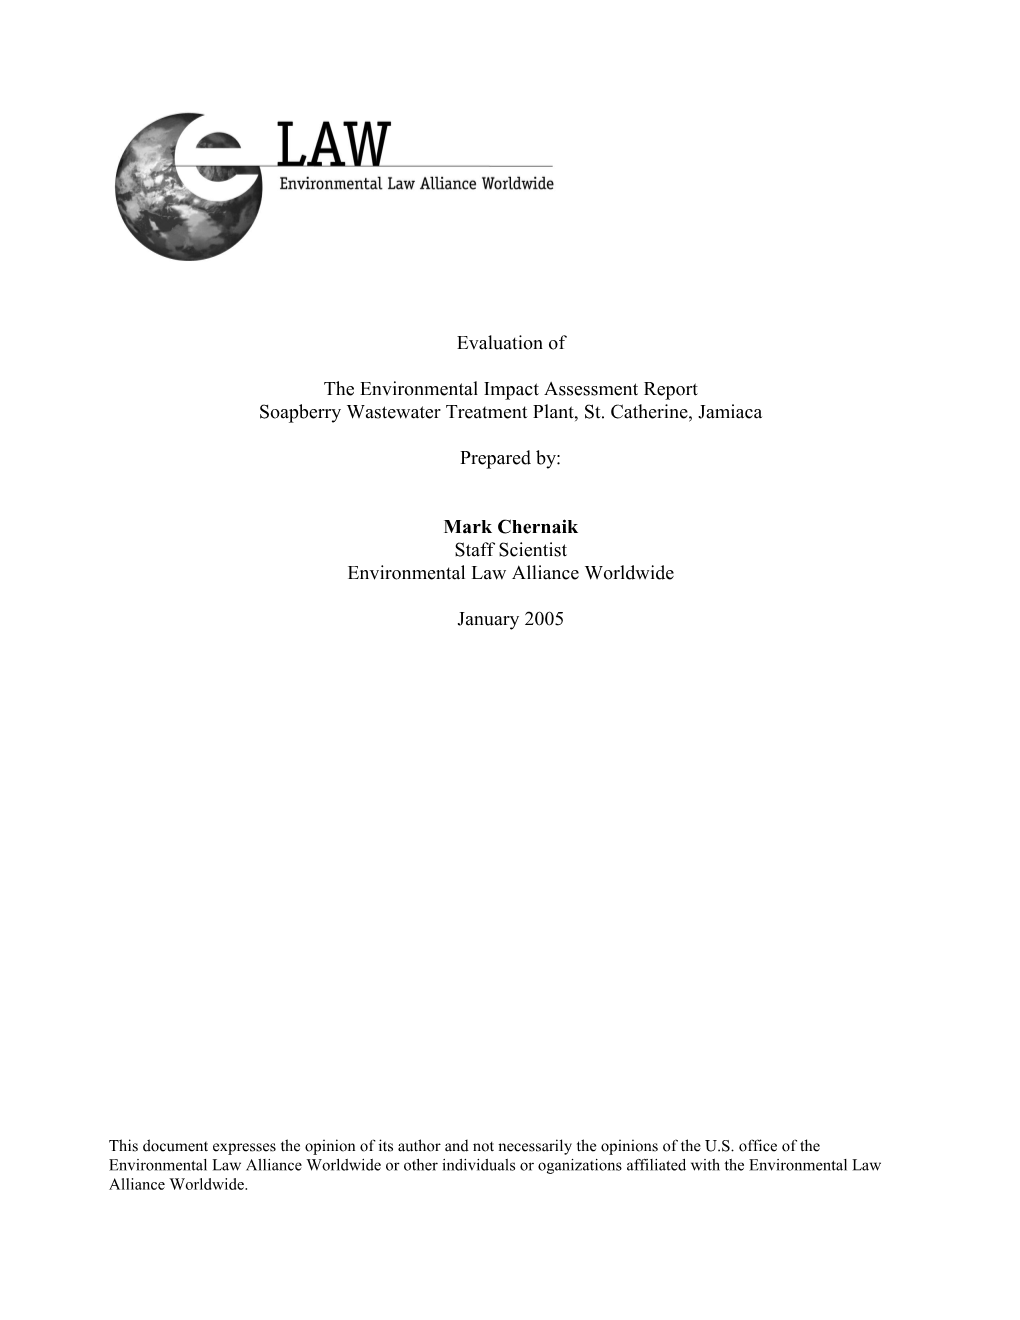 The Environmental Impact Assessment Report